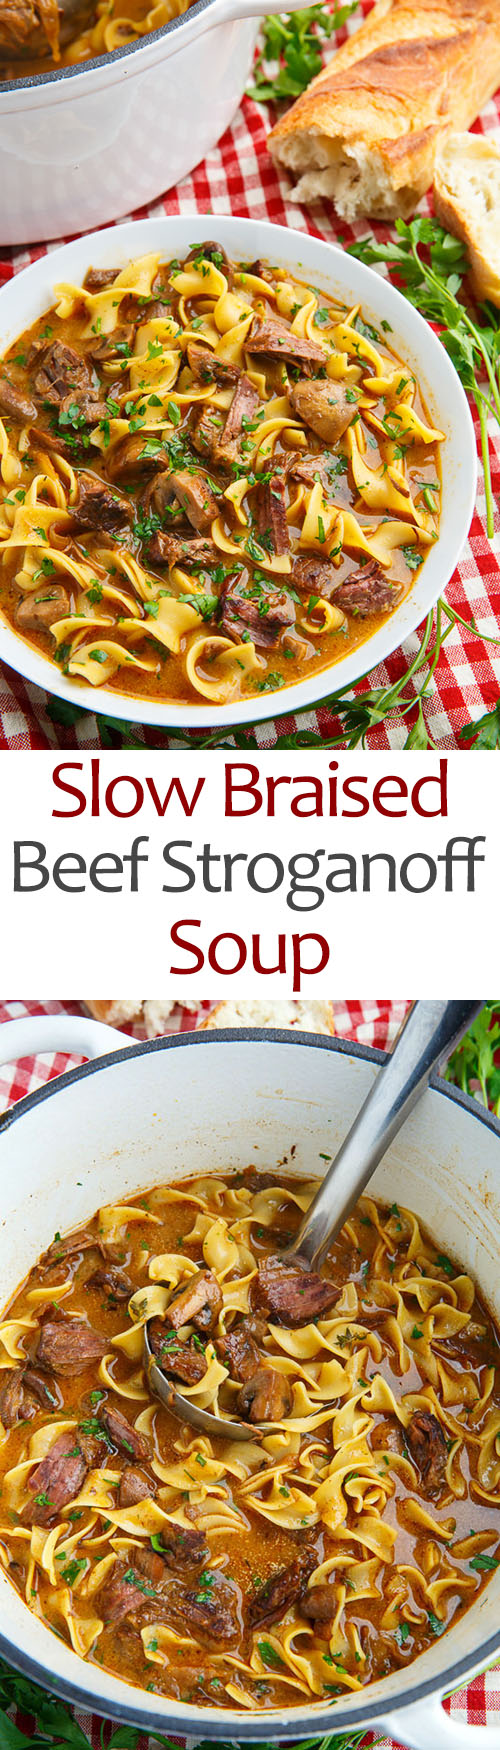 Slow Braised Beef Stroganoff Soup